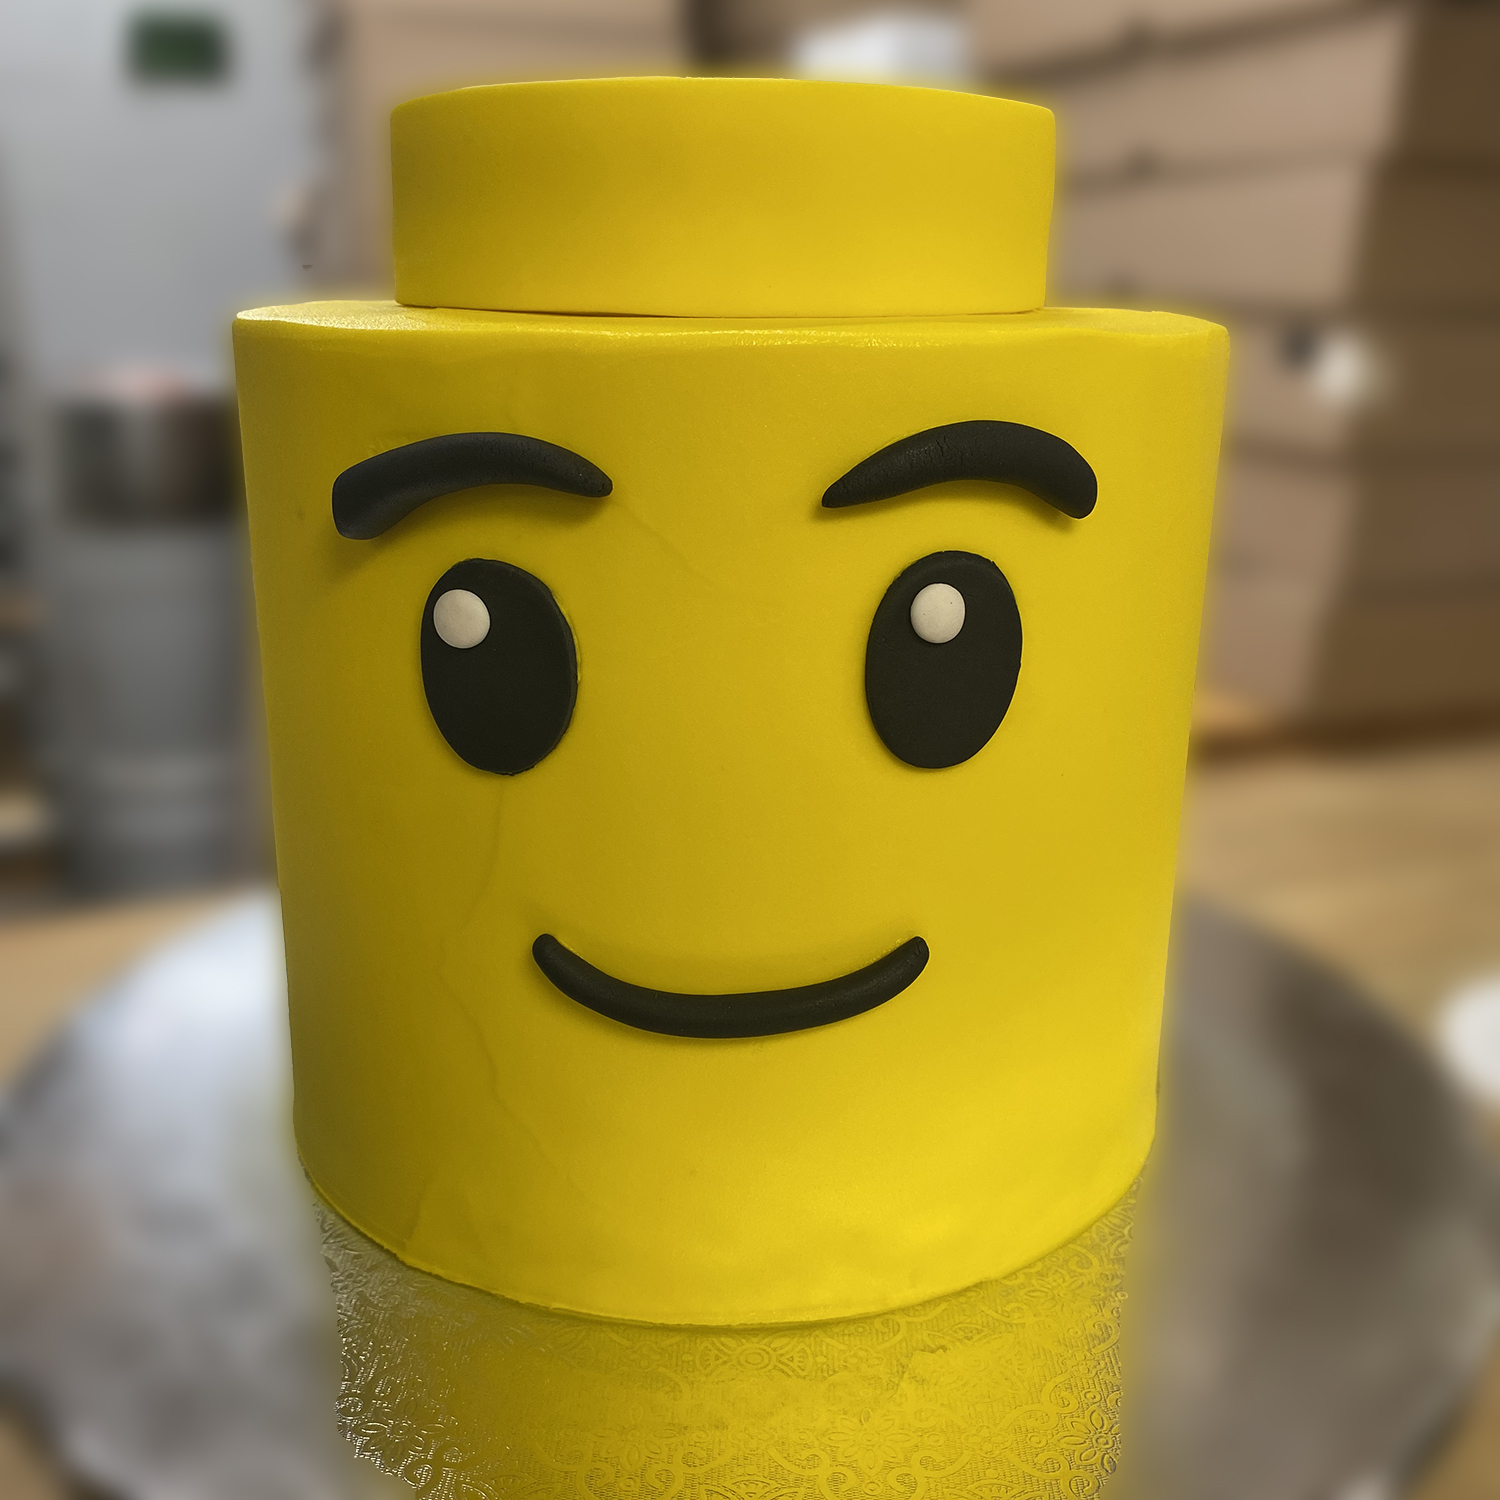 Yellow Lego Cake